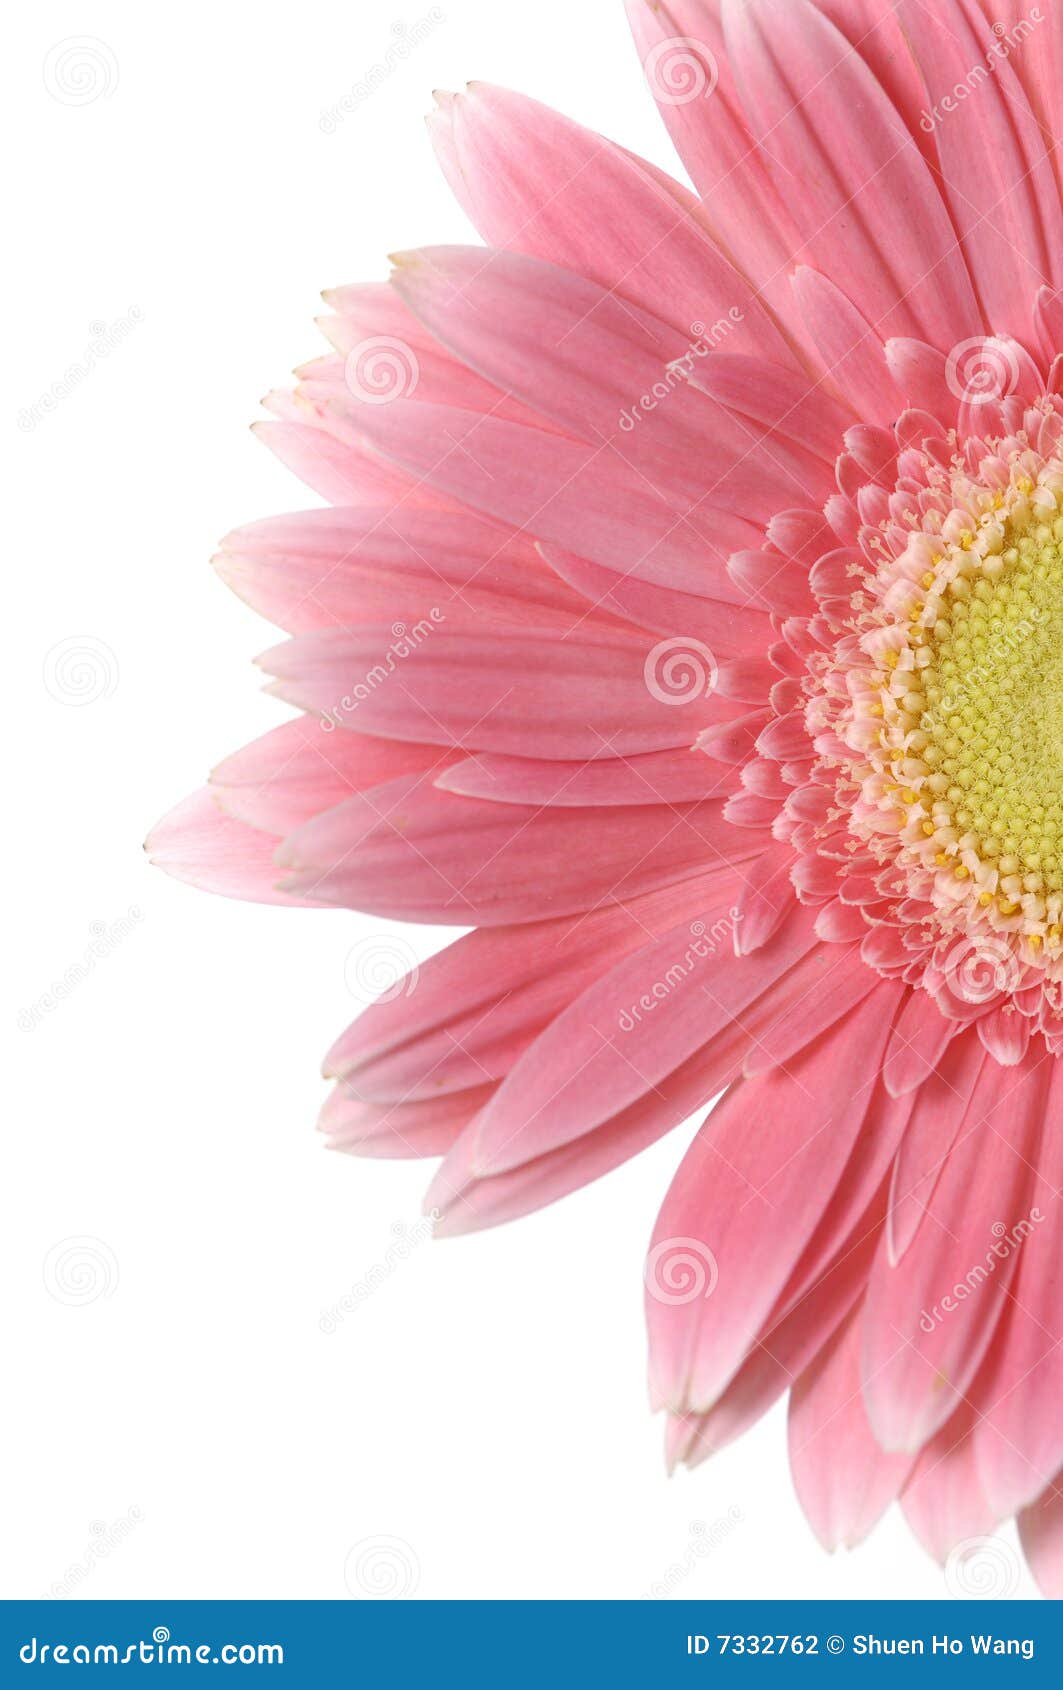 55084 Sunflower Pink Images Stock Photos  Vectors  Shutterstock